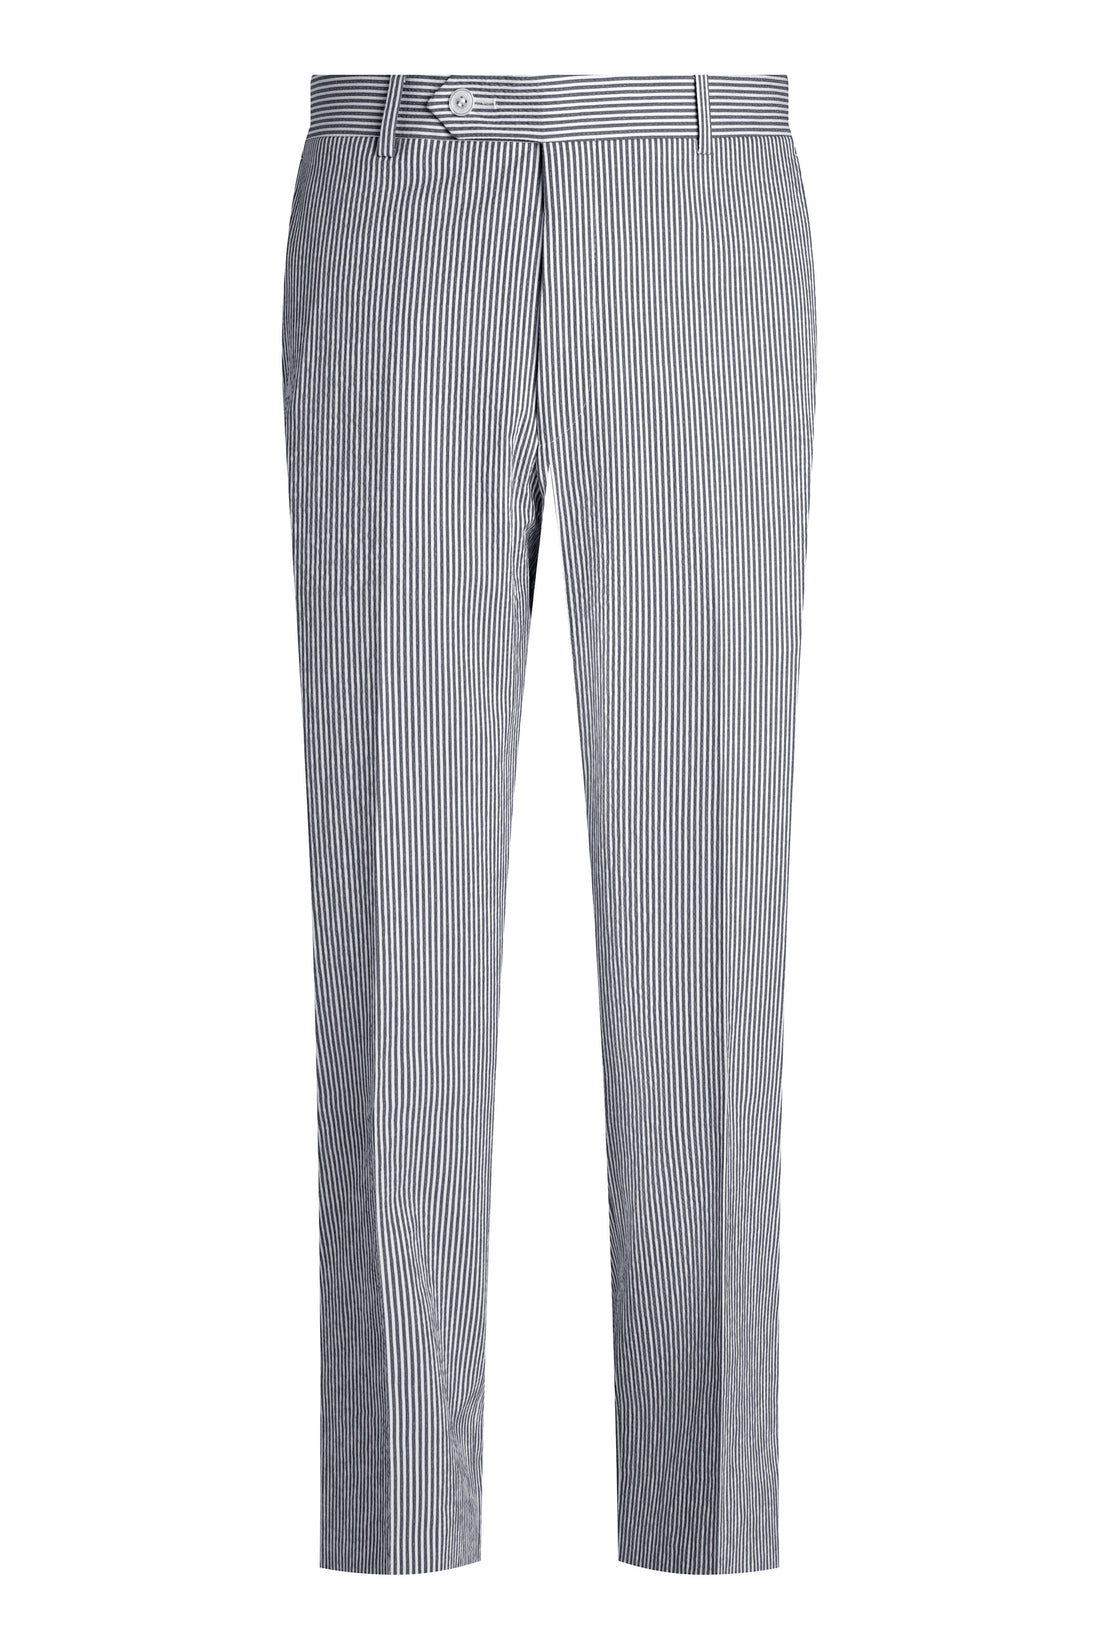 Grey Stripe Seersucker Pant